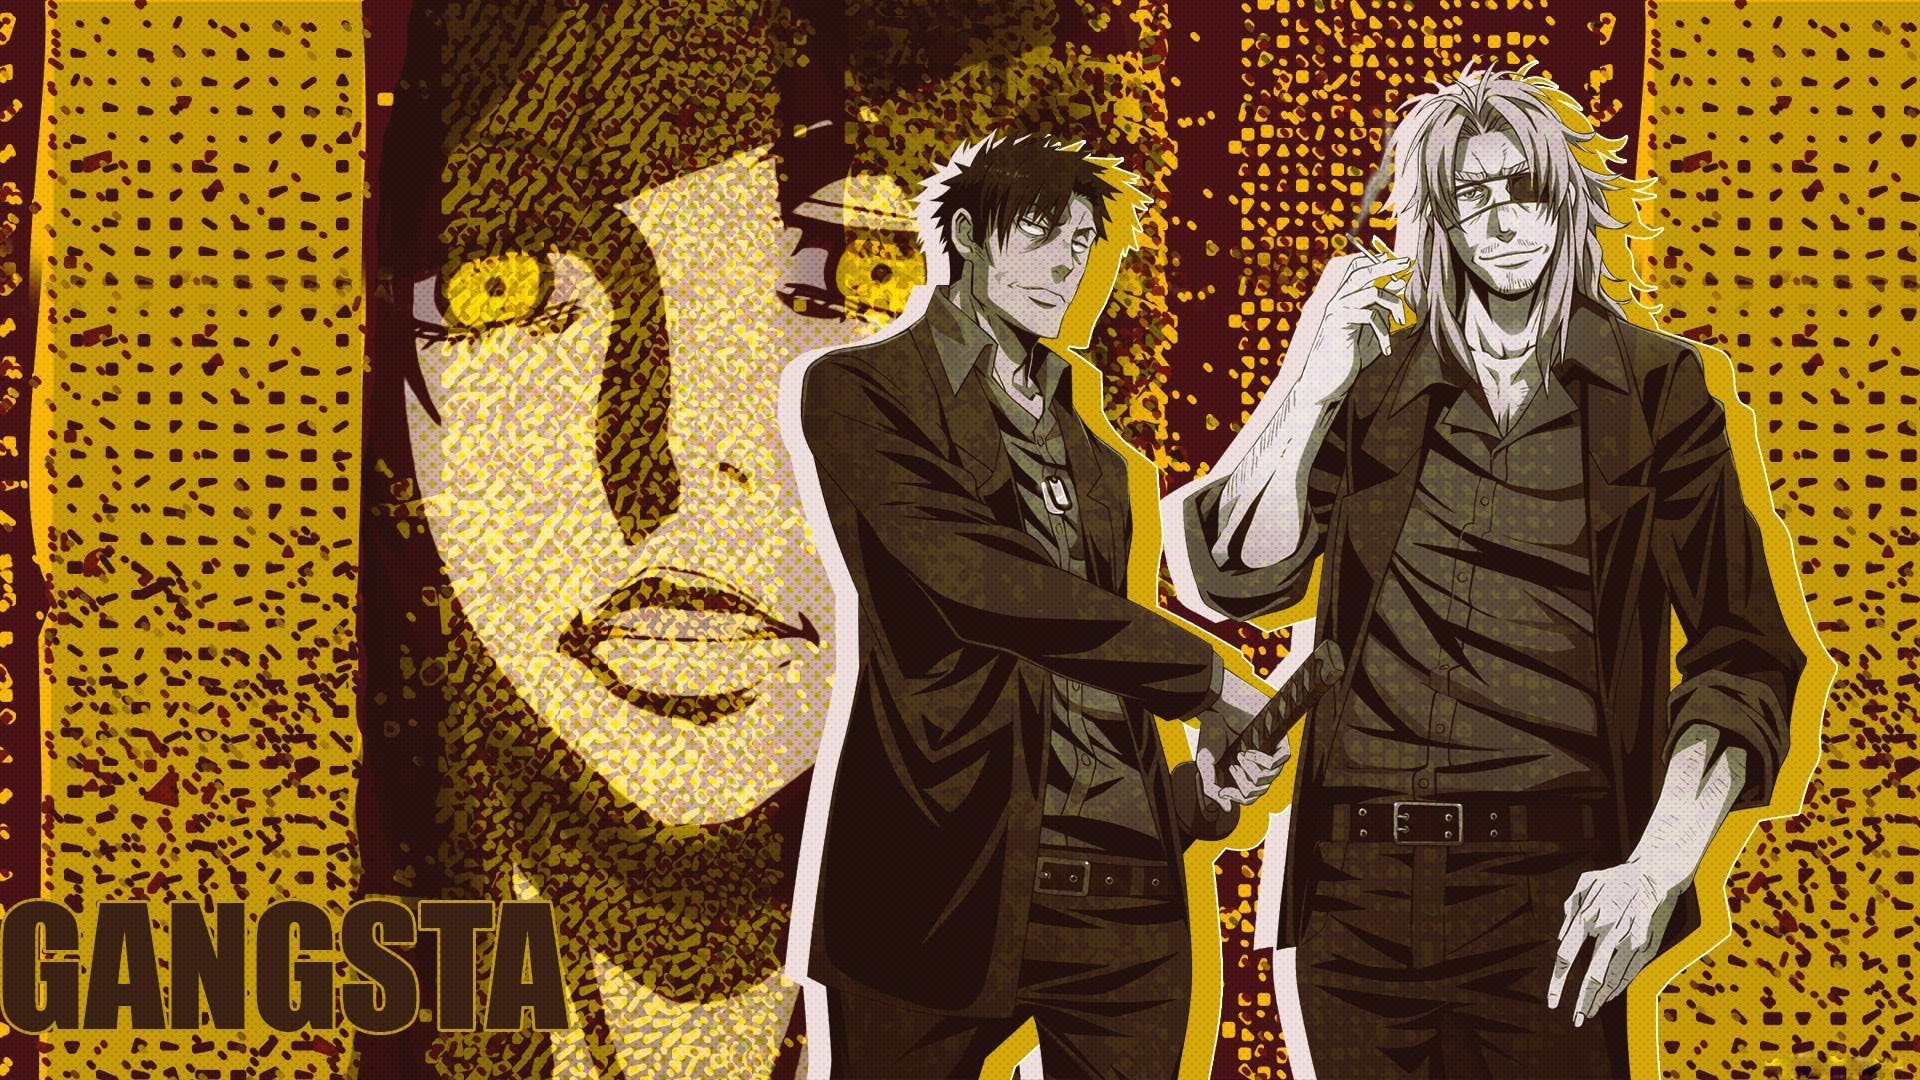 47 Gangsta Anime Wallpaper On Wallpapersafari Images, Photos, Reviews